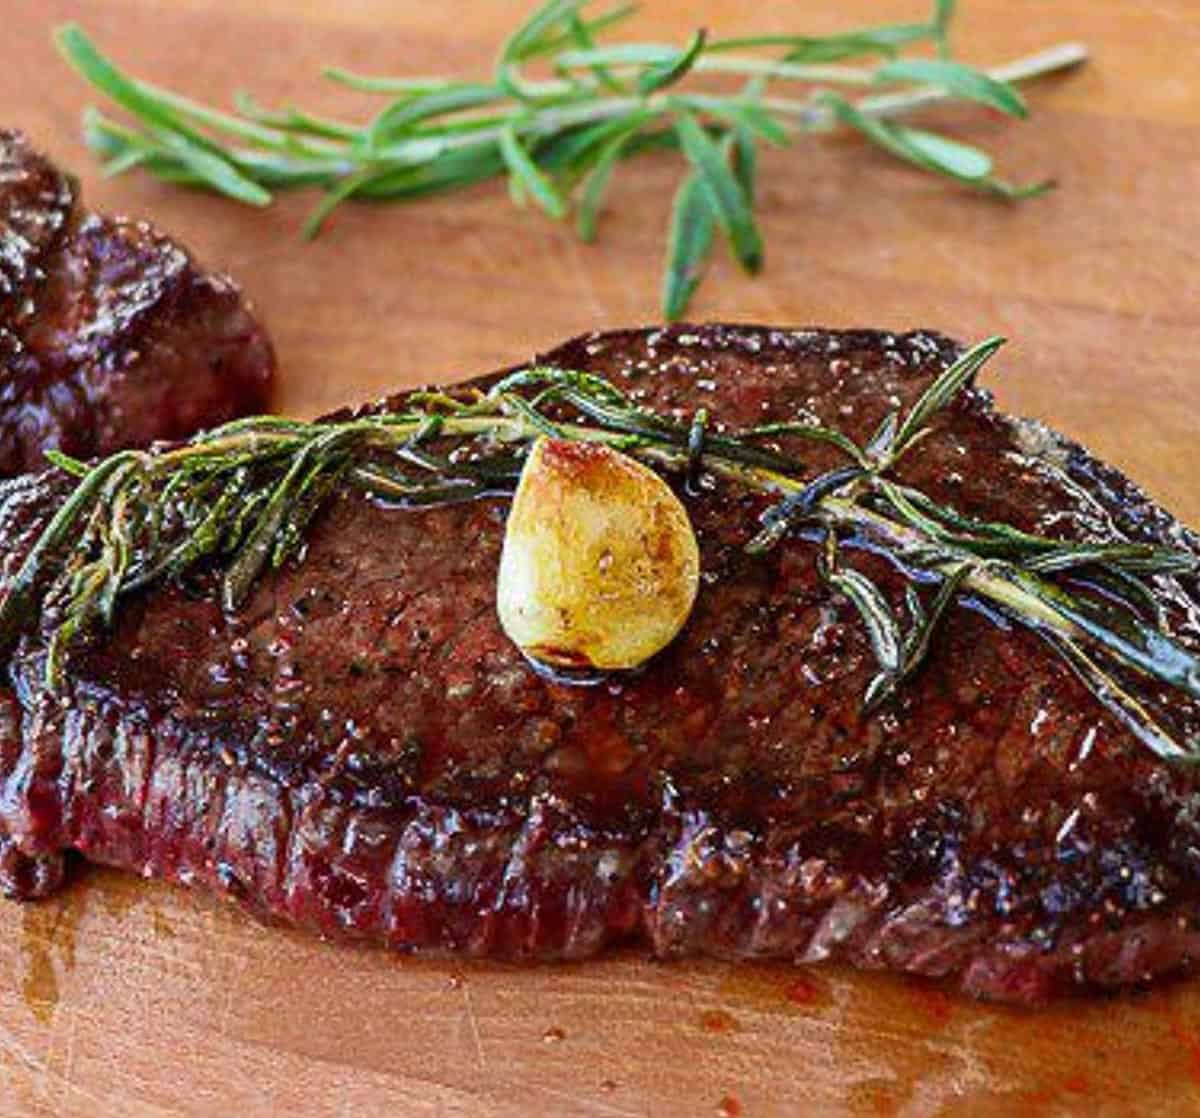  A juicy elk steak is the perfect summer BBQ dish.